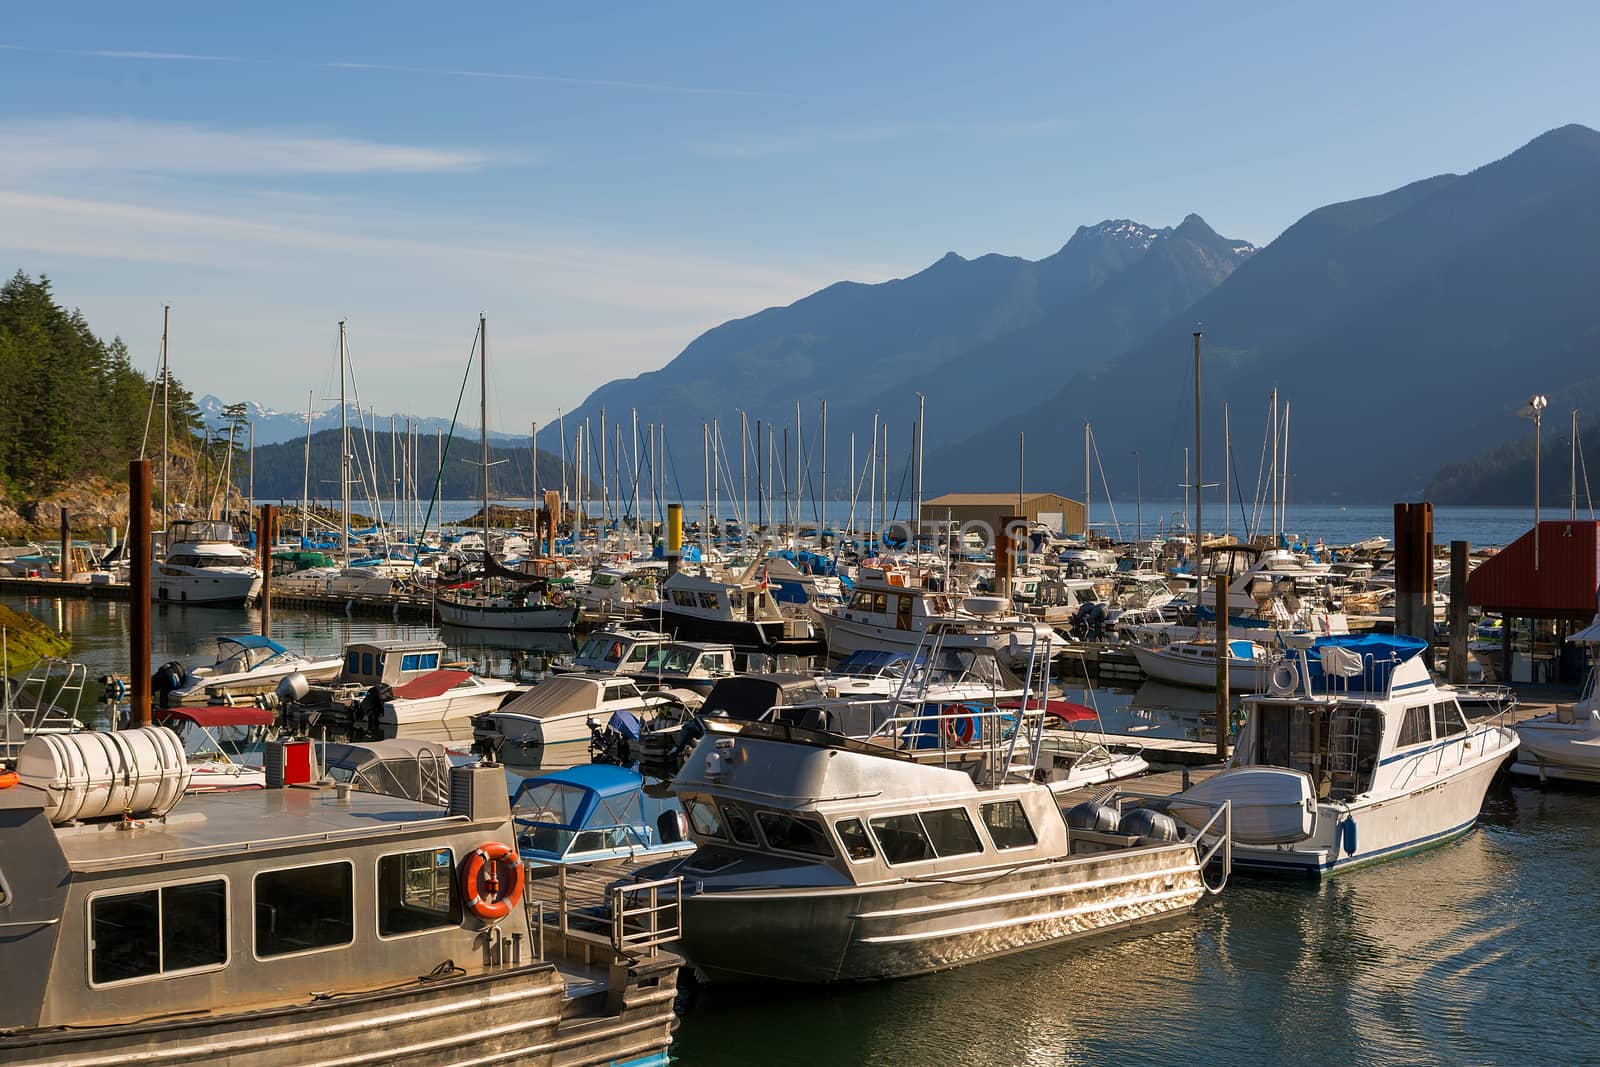 Boats moored at Horseshoe Bay Marina in British Columbia Canada